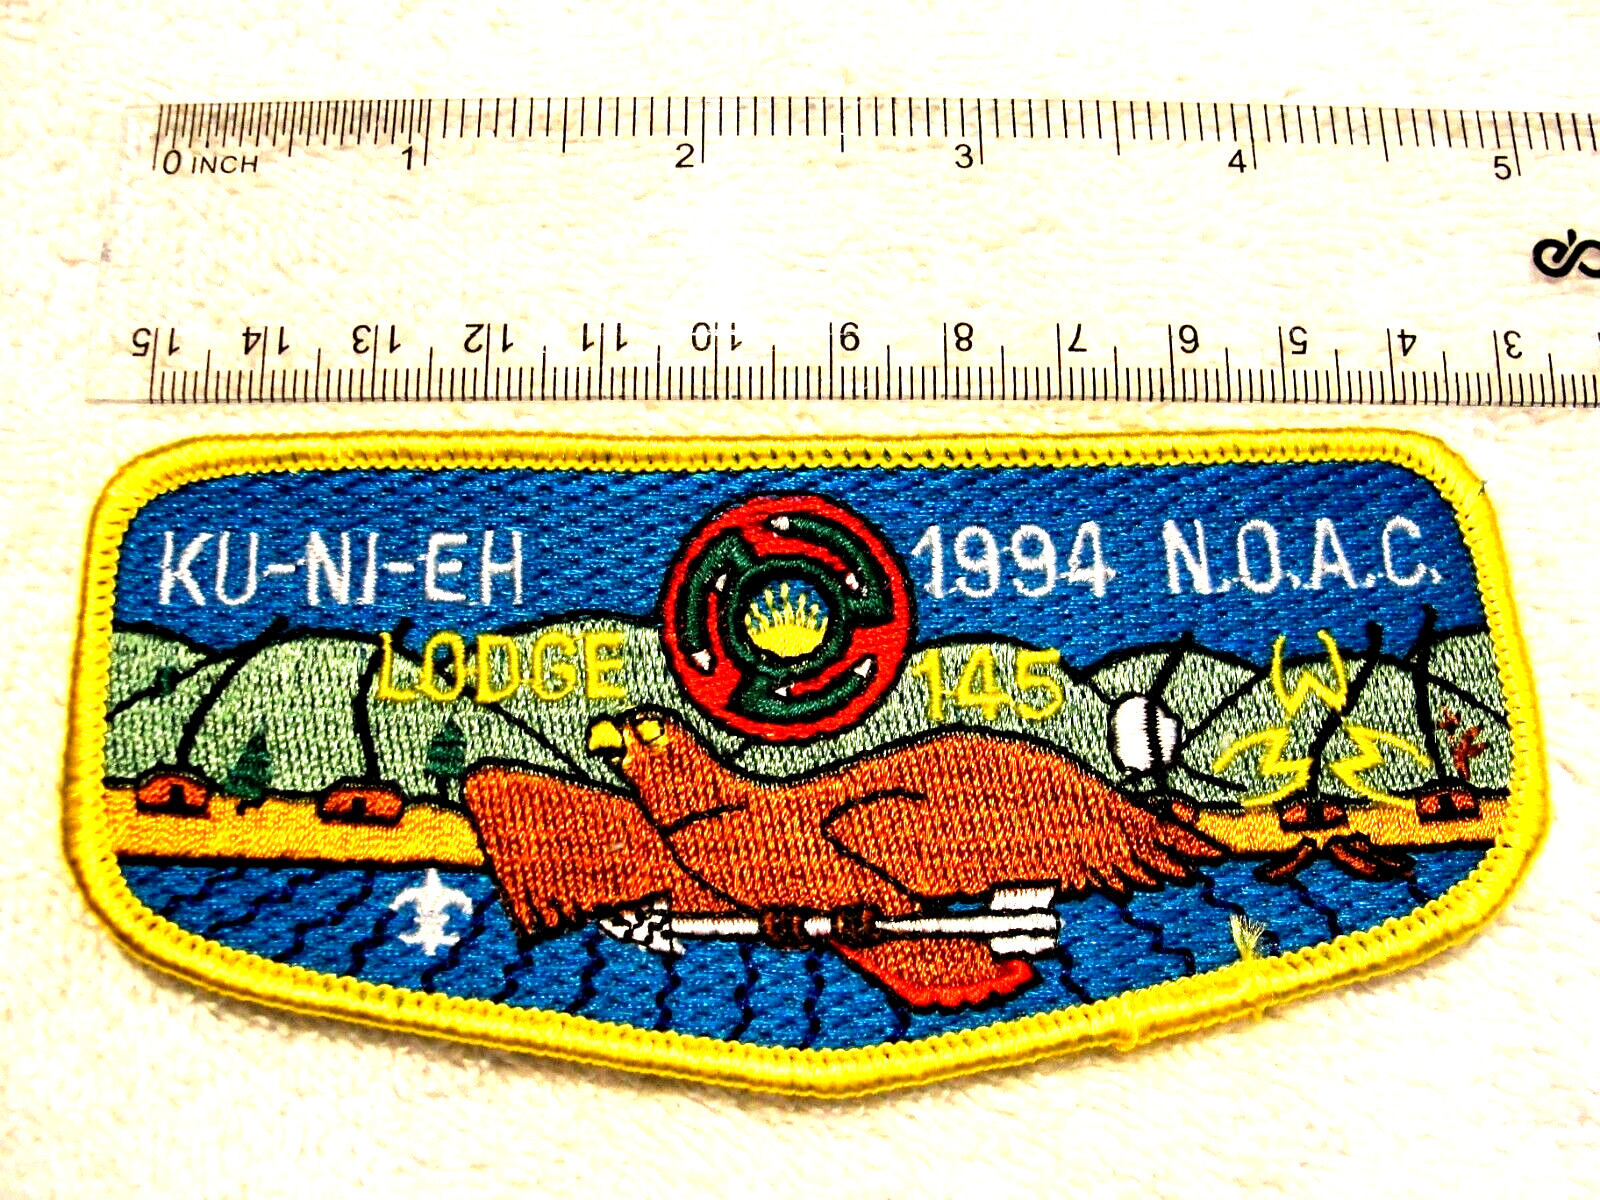 1994 NOAC, OA Lodge #145 Ku-Ni-Eh (Dan Beard), Pocket Flap Patch PP, BSA. New